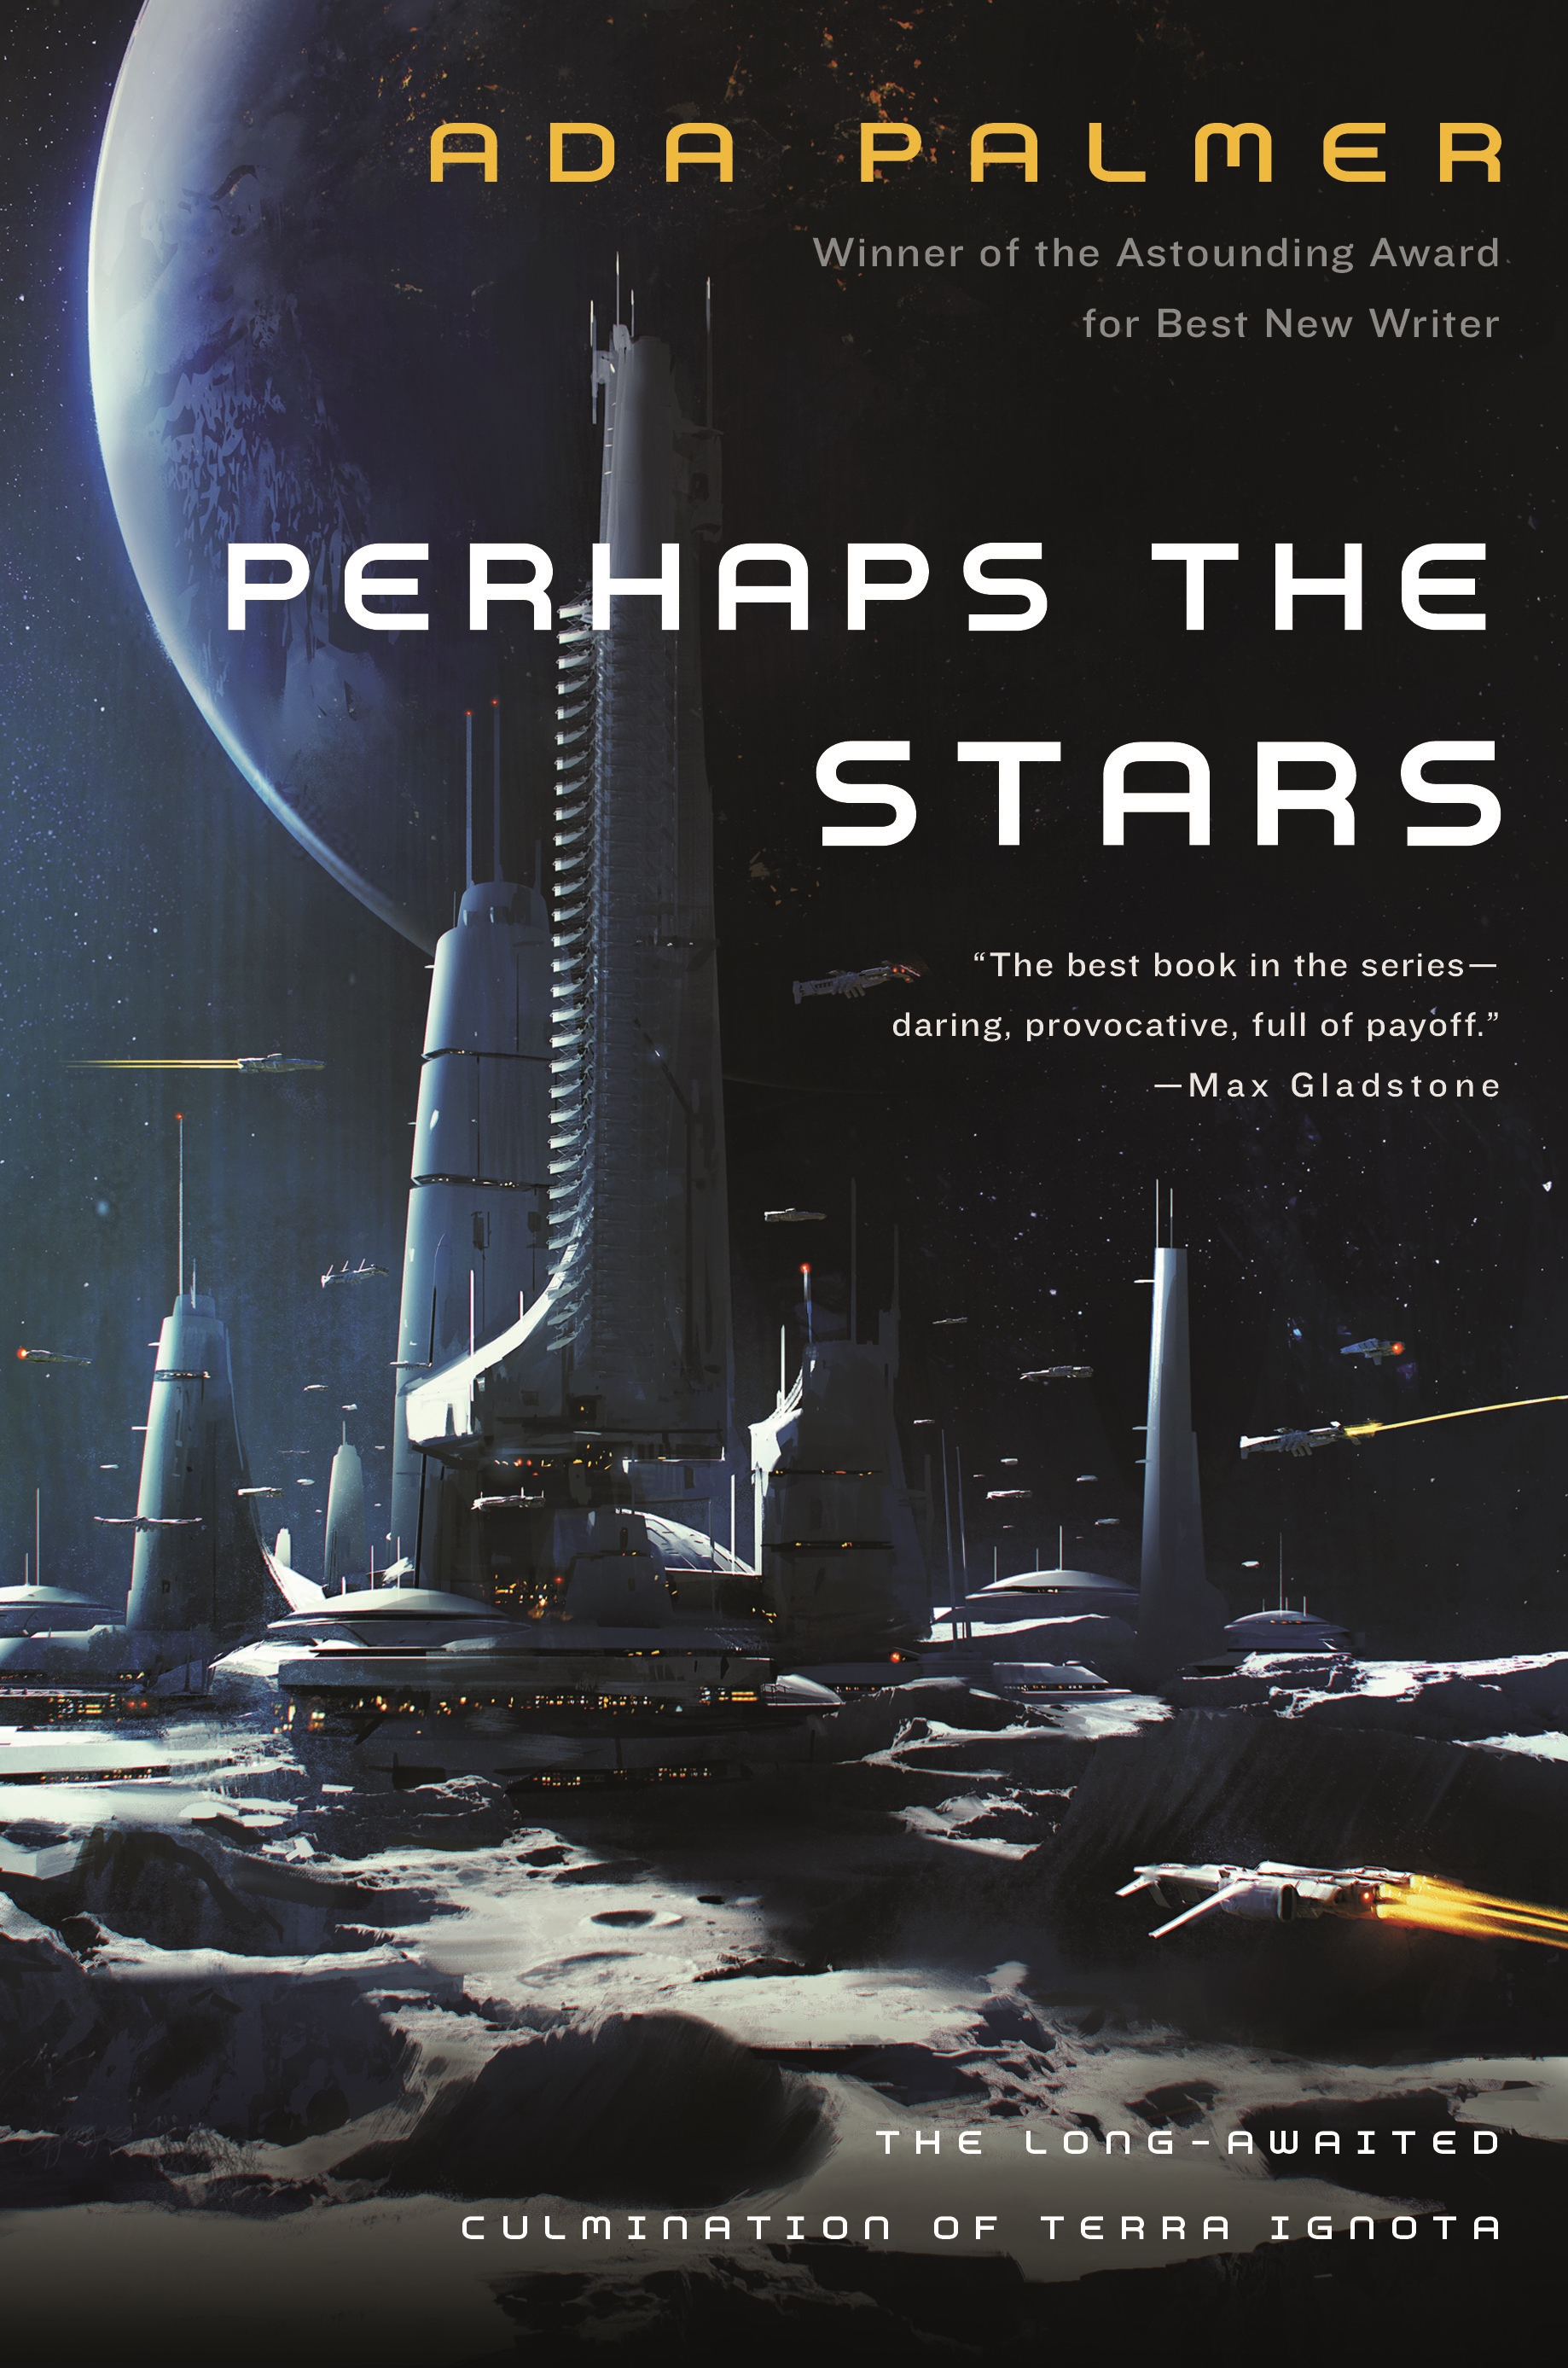 Perhaps the Stars by Ada Palmer